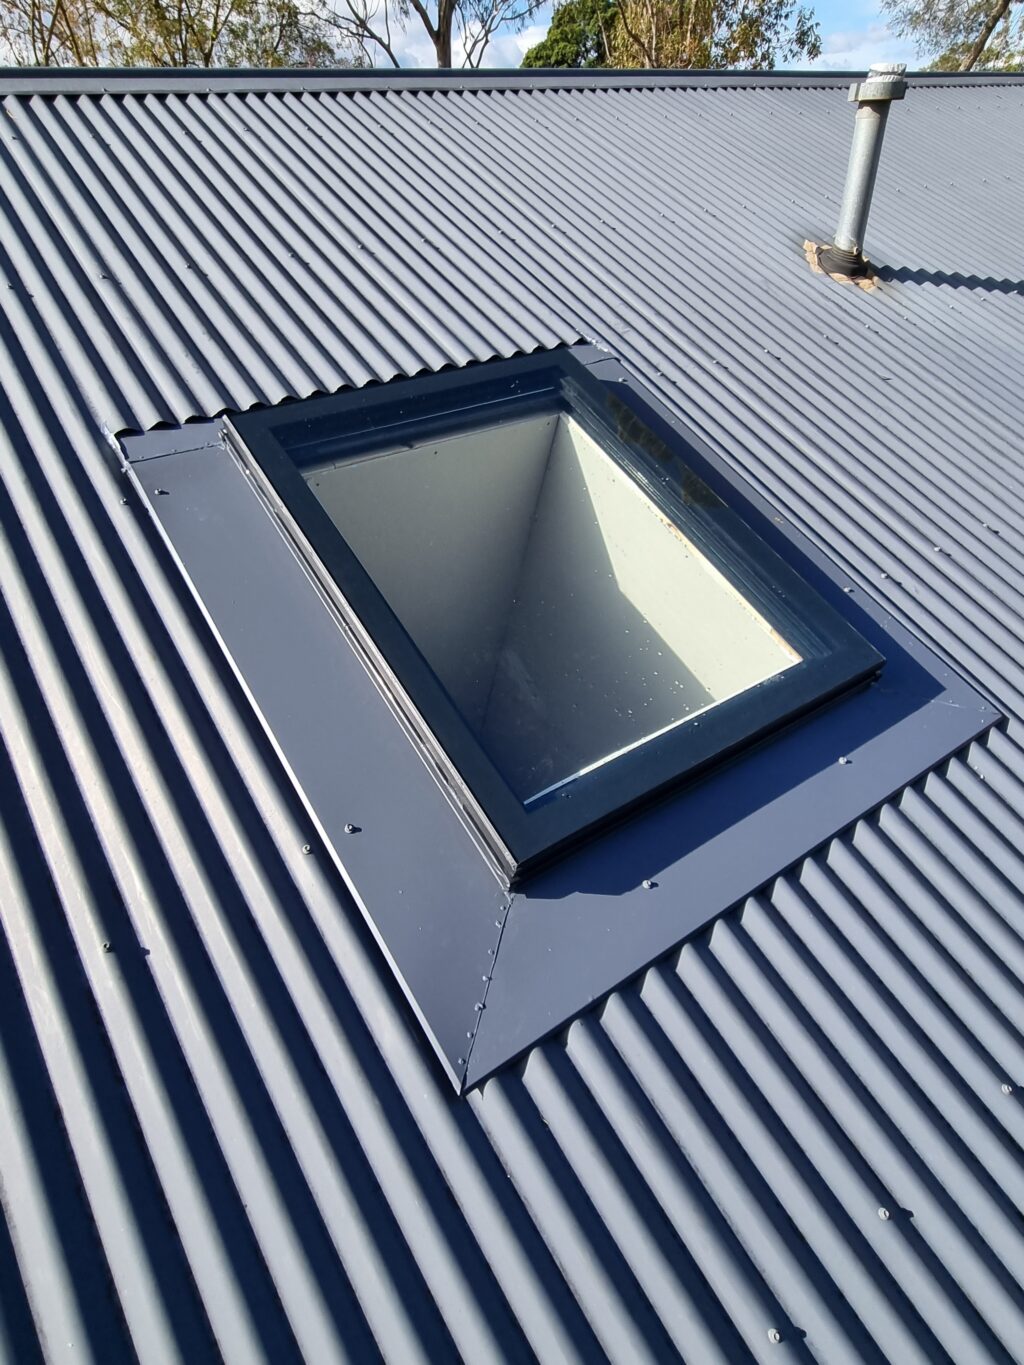 Skylight on colorbond roof